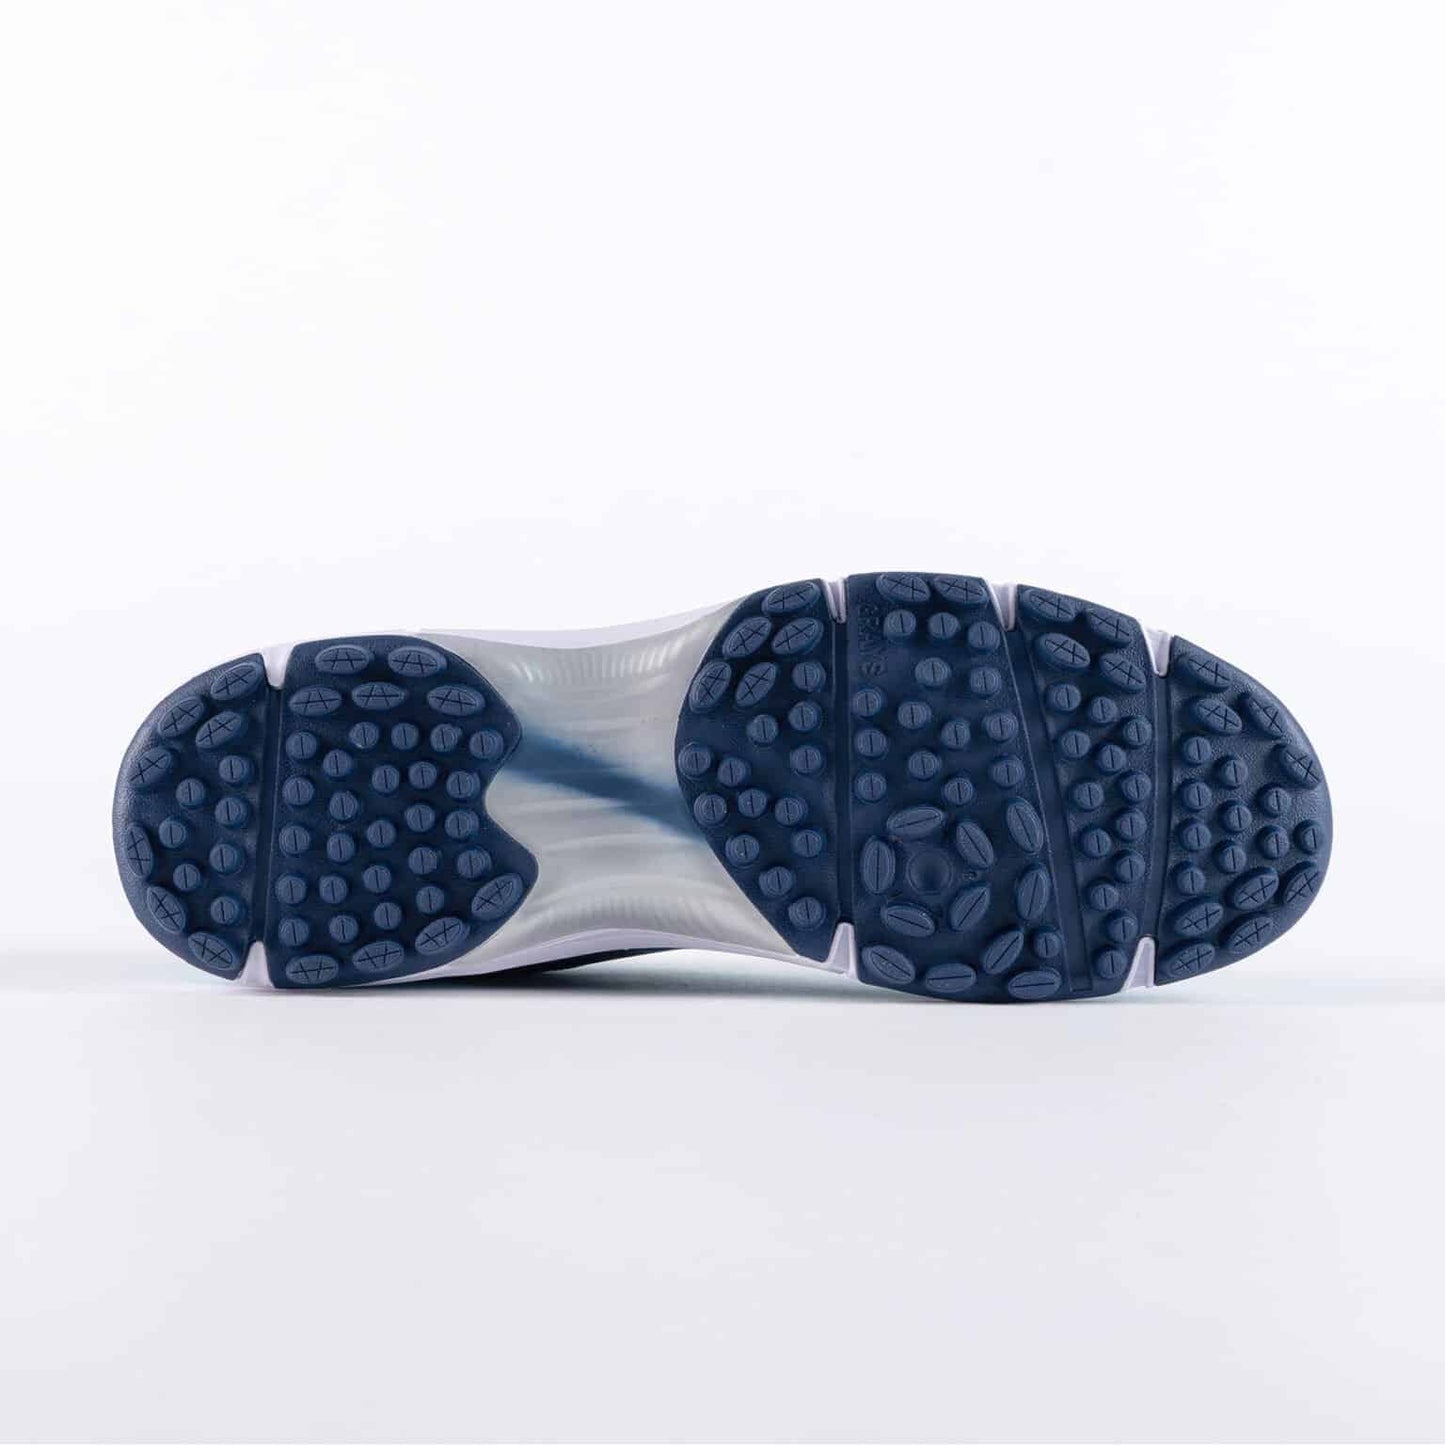 Grays Flash 3.0 Hockey Shoes – Blue